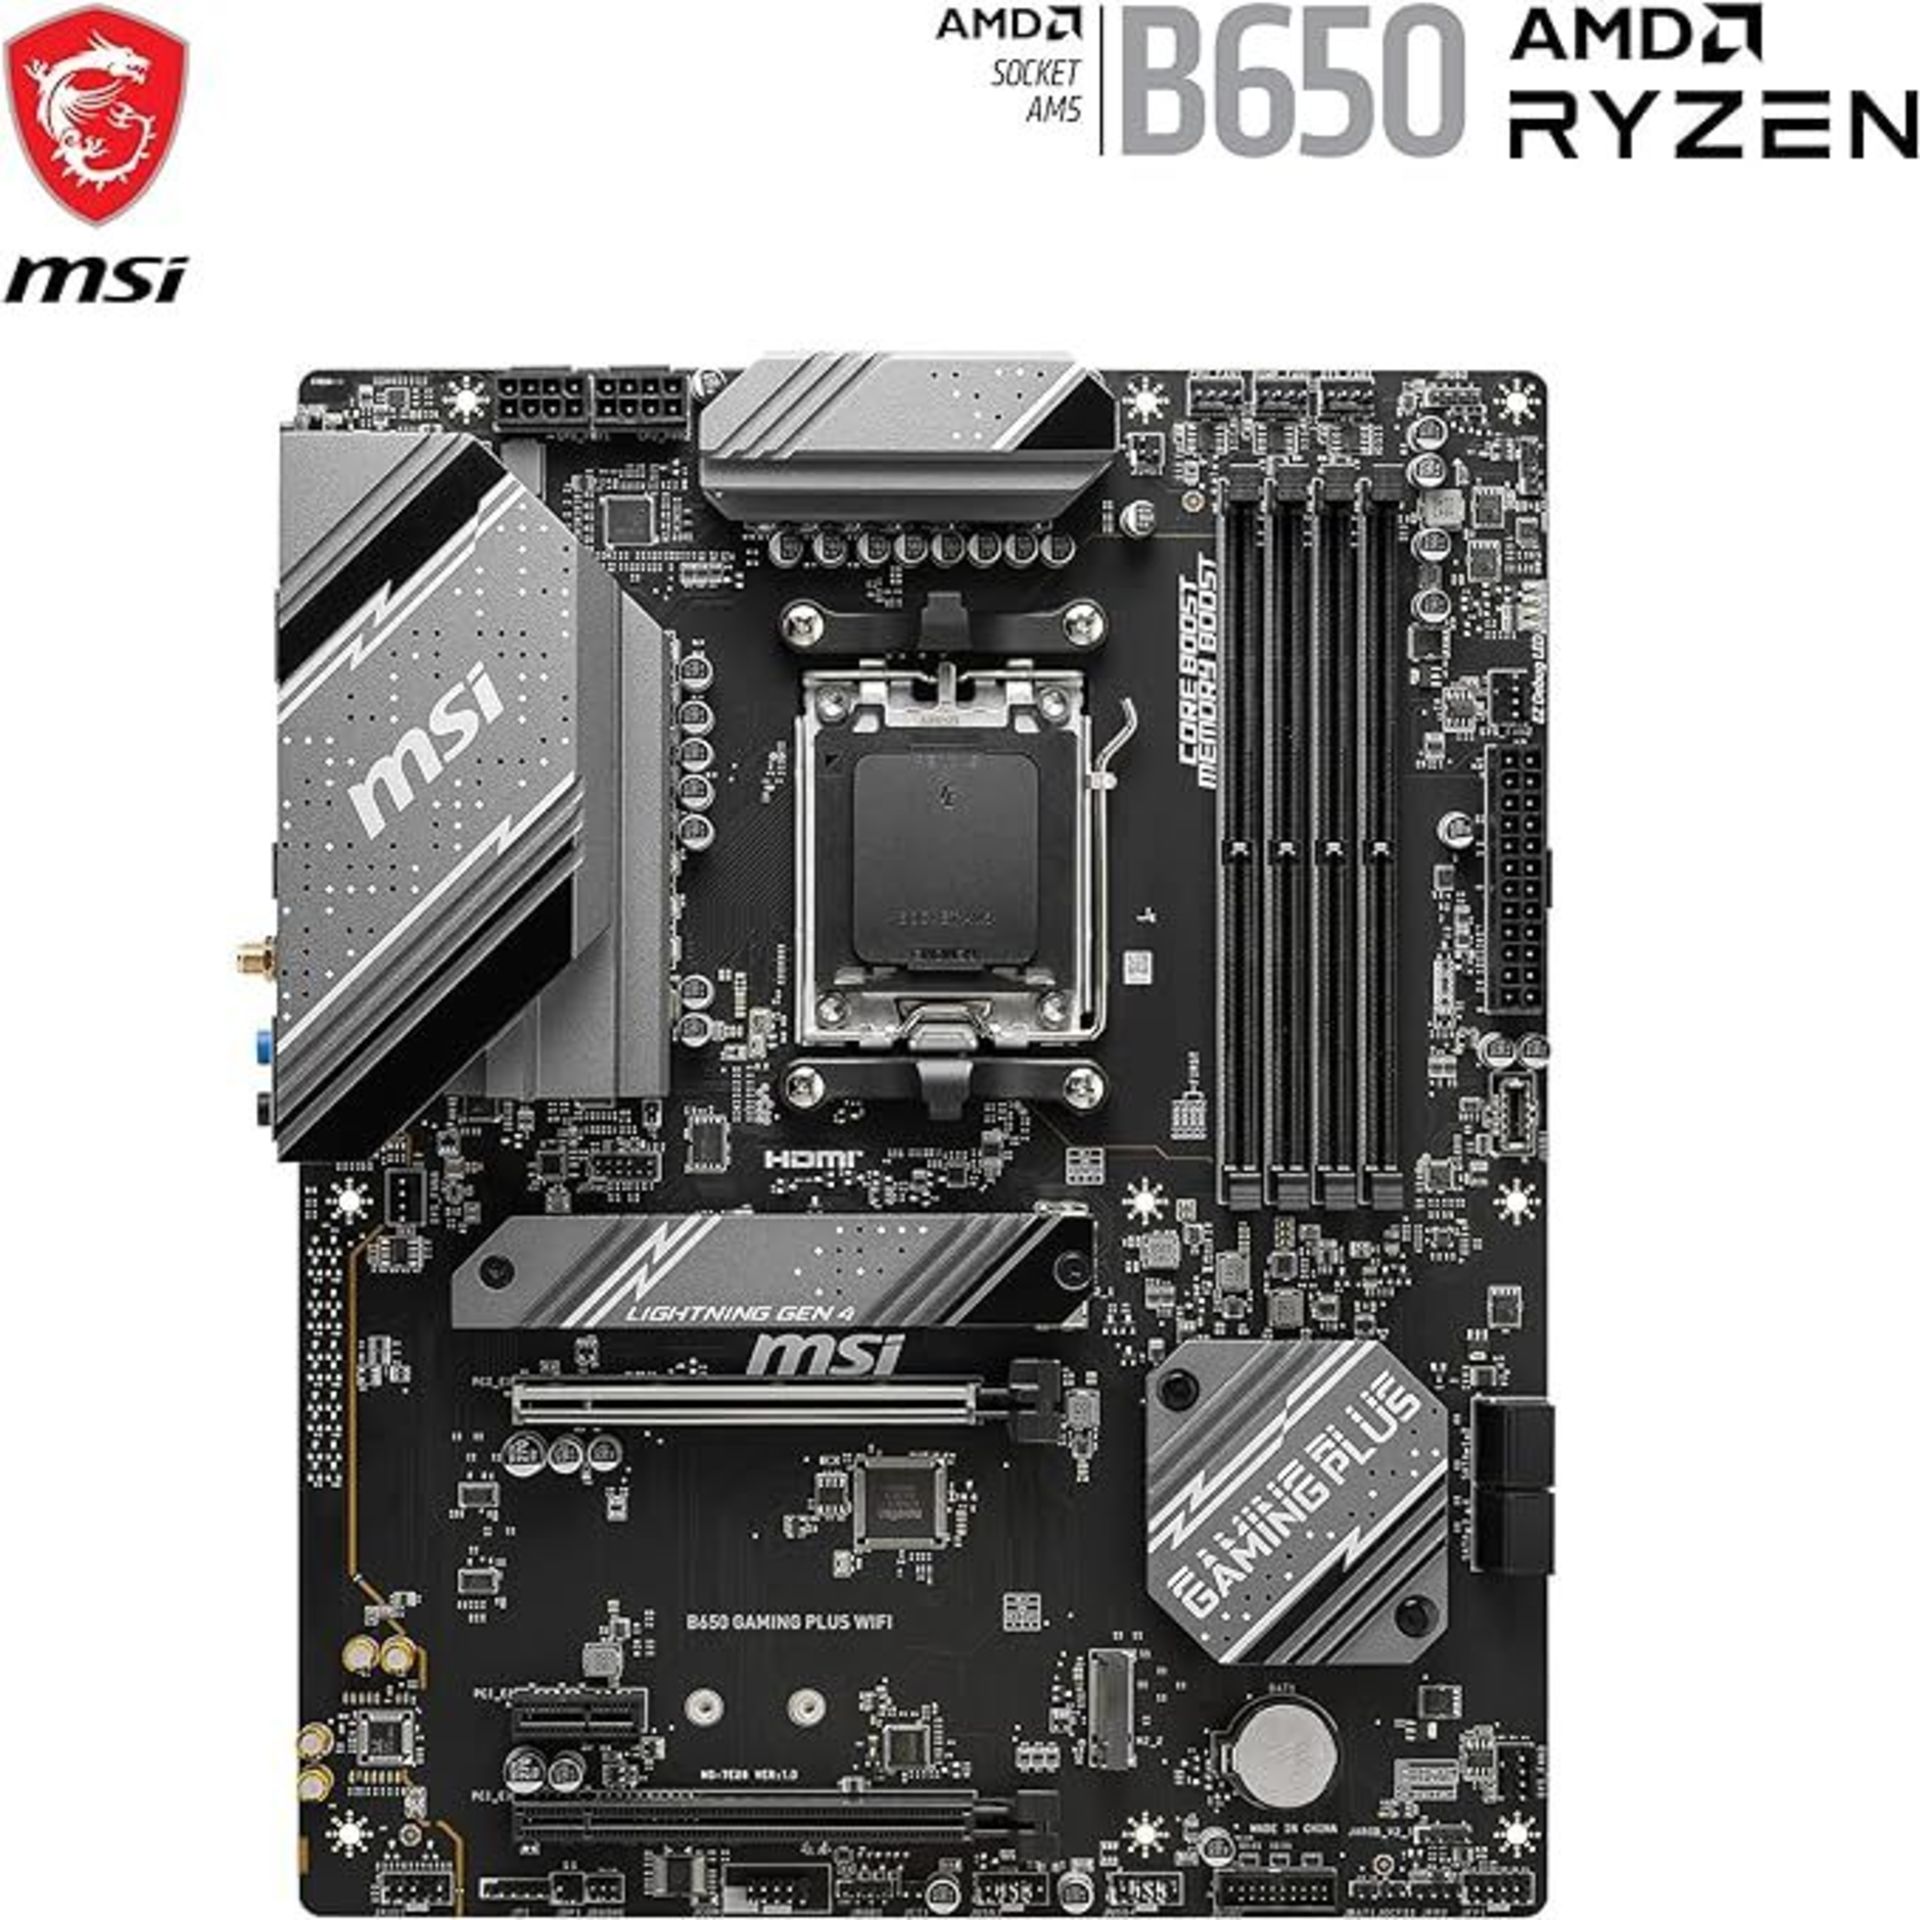 MSI B650 GAMING PLUS WIFI Motherboard, ATX - P2. Supports AMD Ryzen 7000 Series Processors, AM5 -